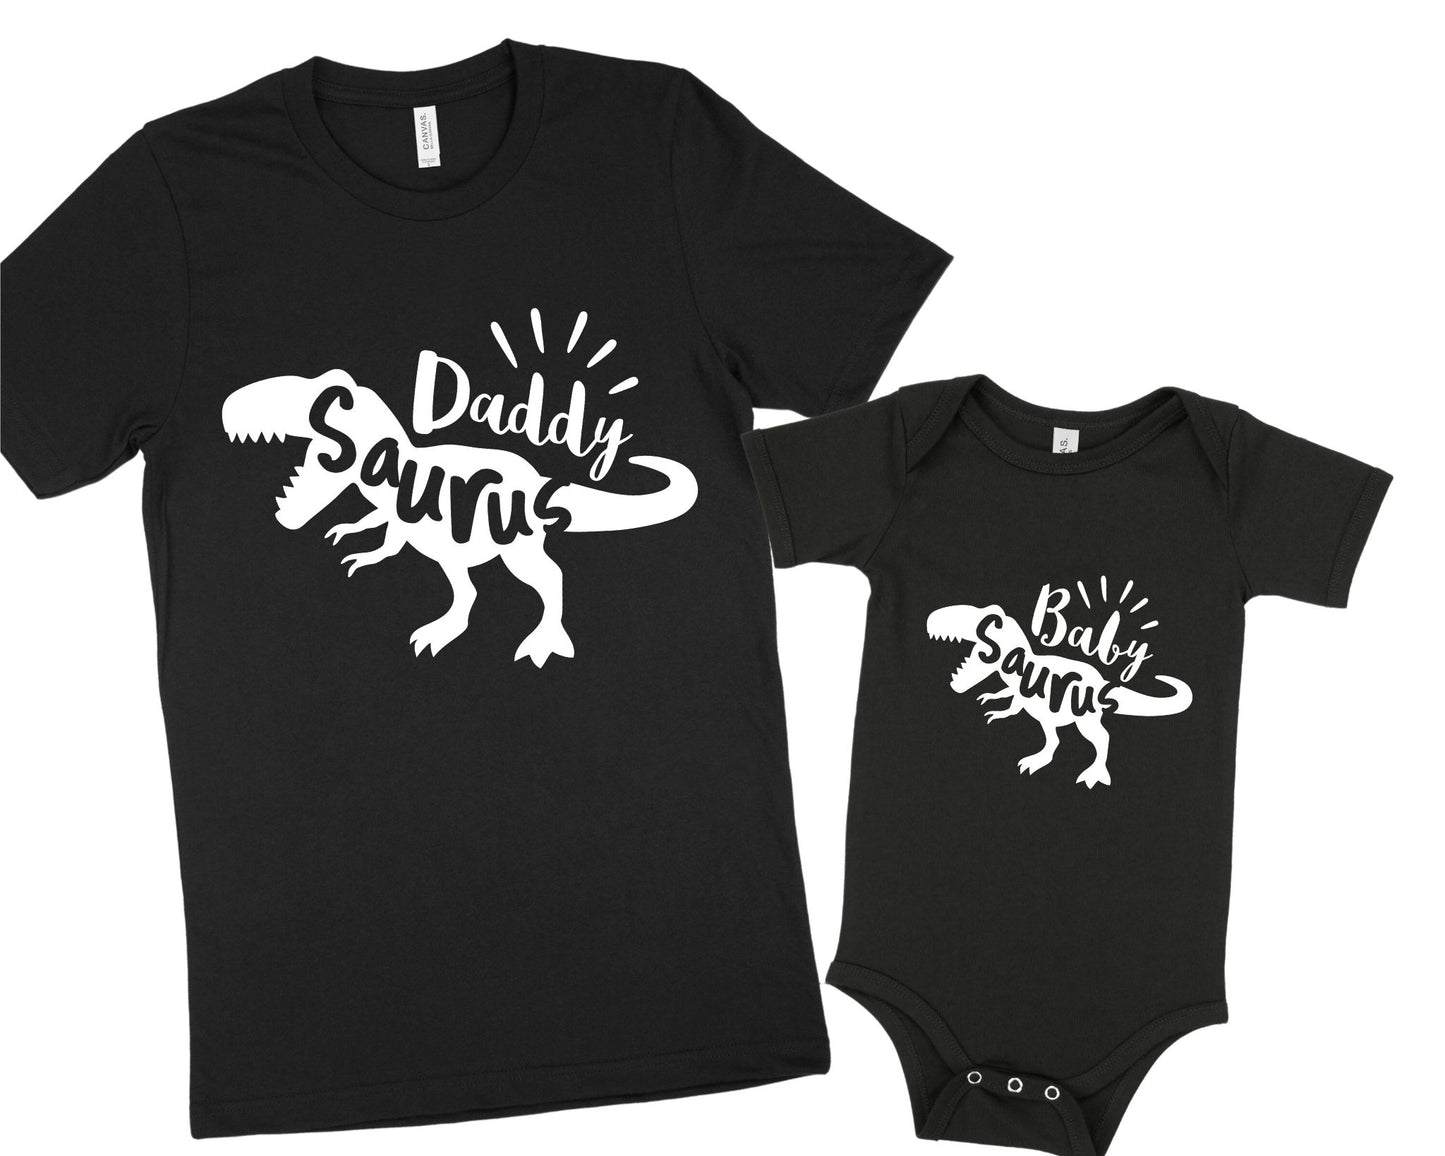 Daddysaurus & Babysaurus Matching Shirt Set